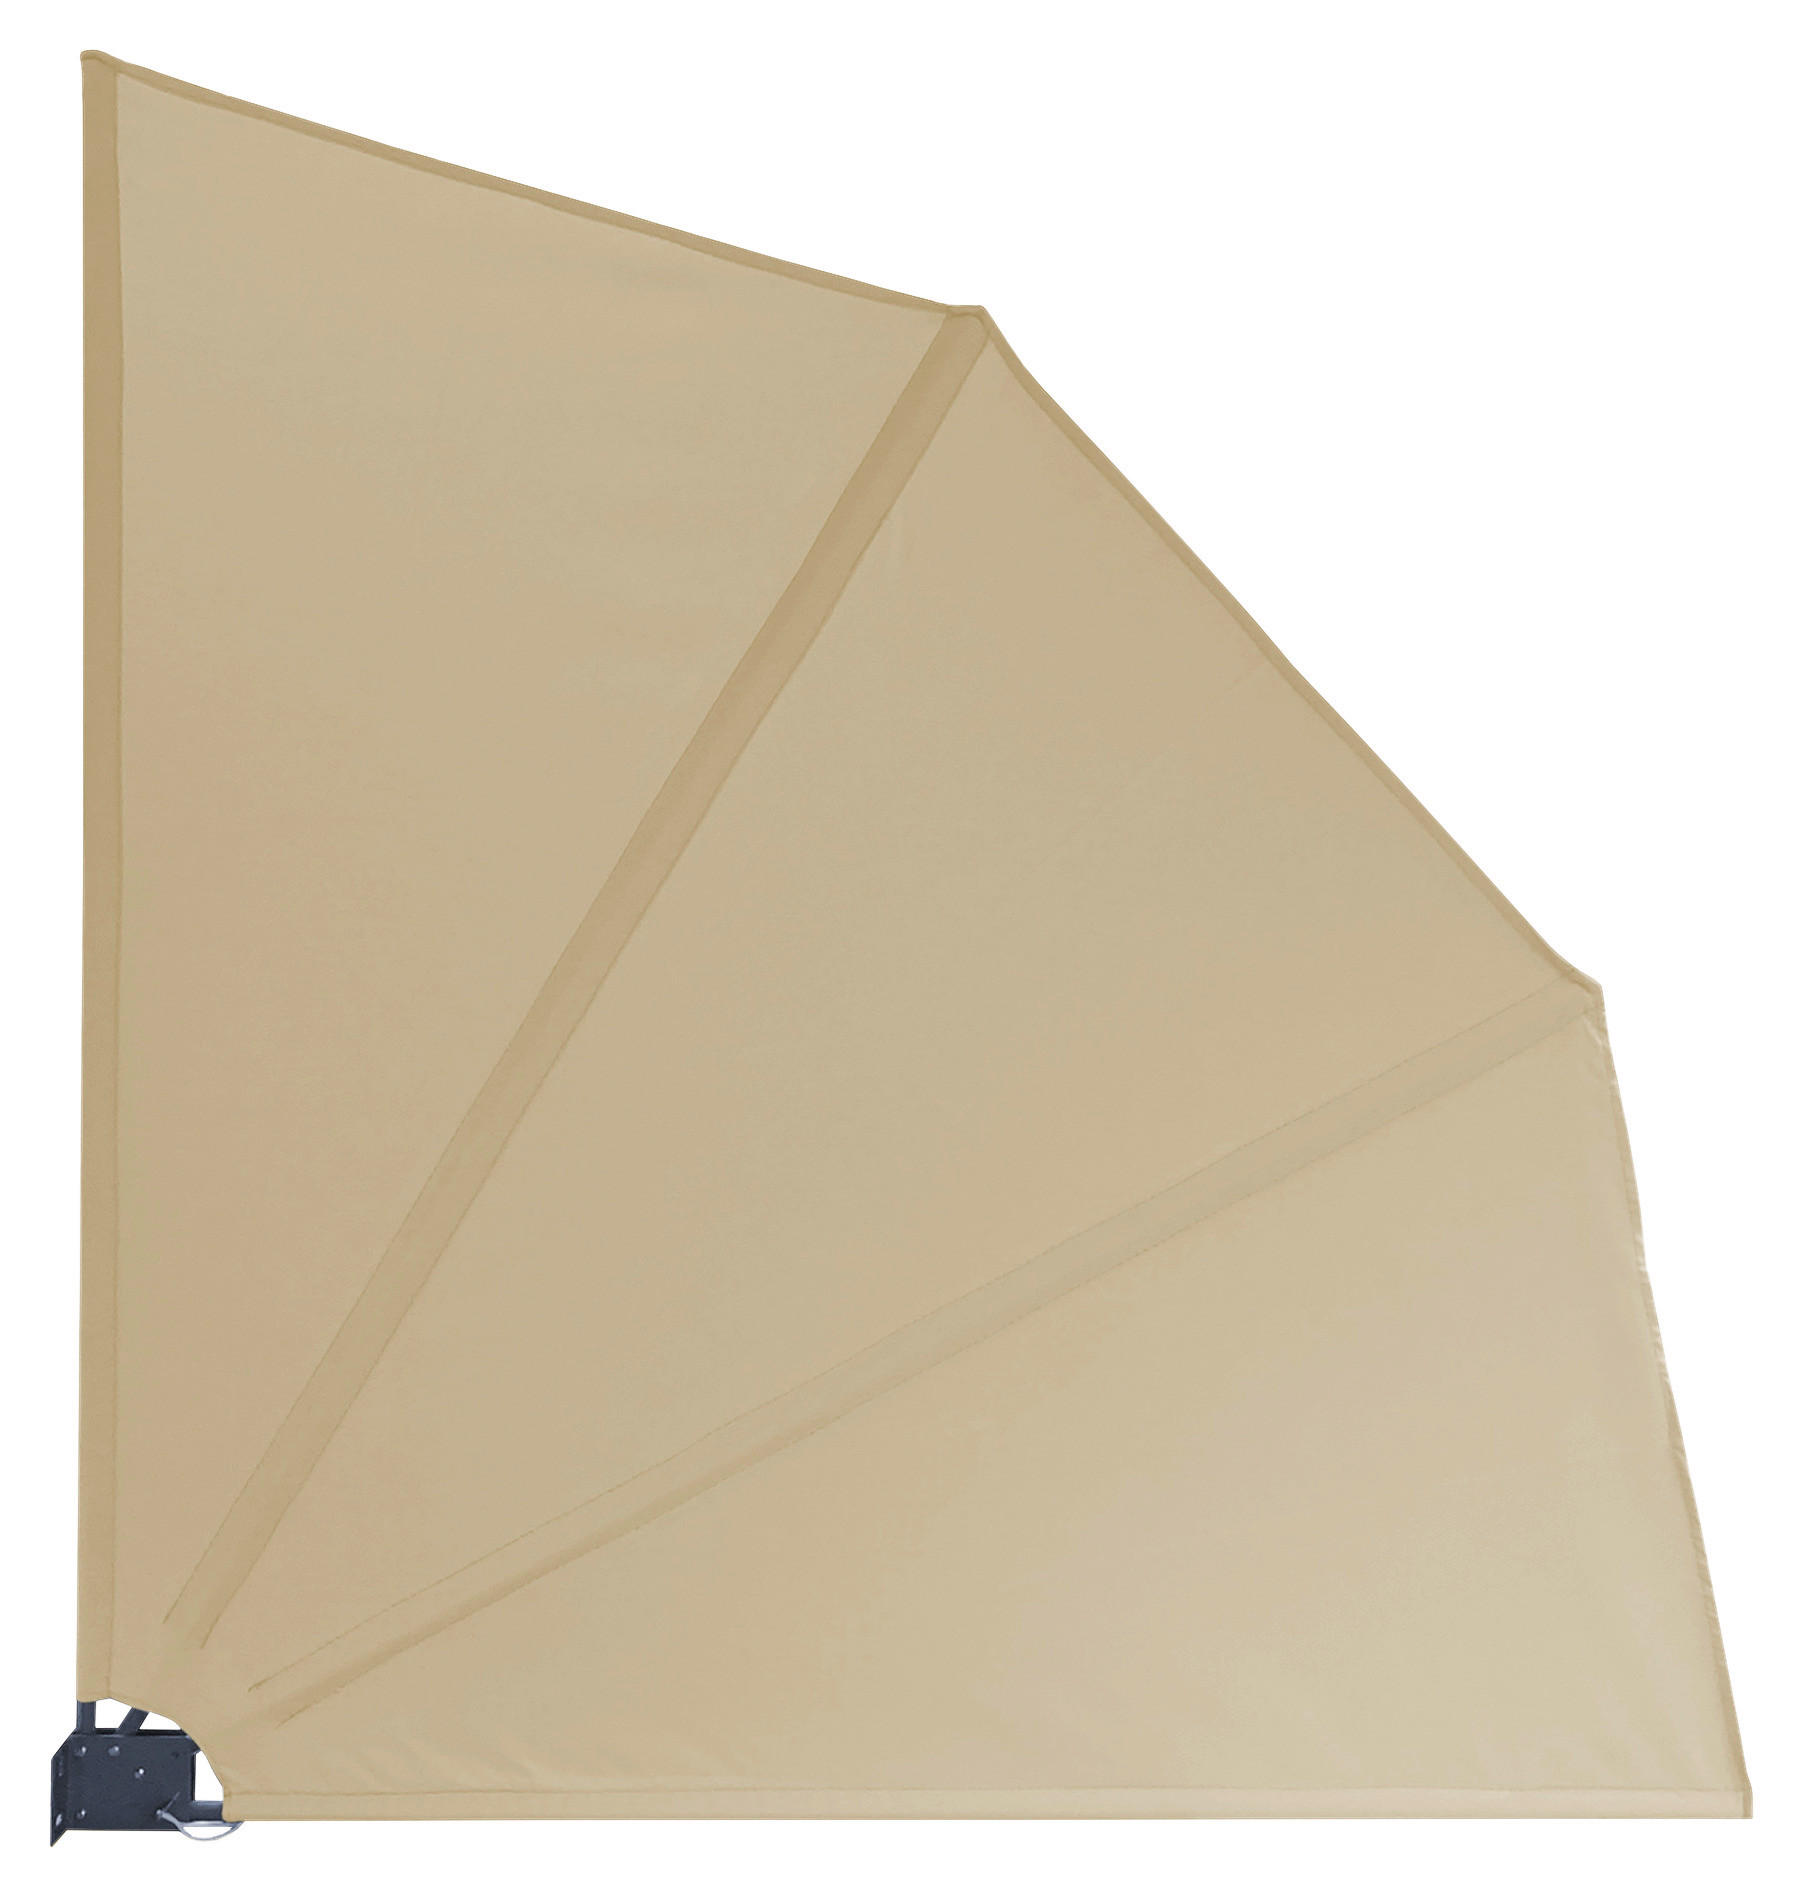 Grasekamp Balkonfächer beige Polyester-Mischgewebe B/L: ca. 140x140 cm Balkonfächer_140x140cm - beige (140,00/140,00cm)